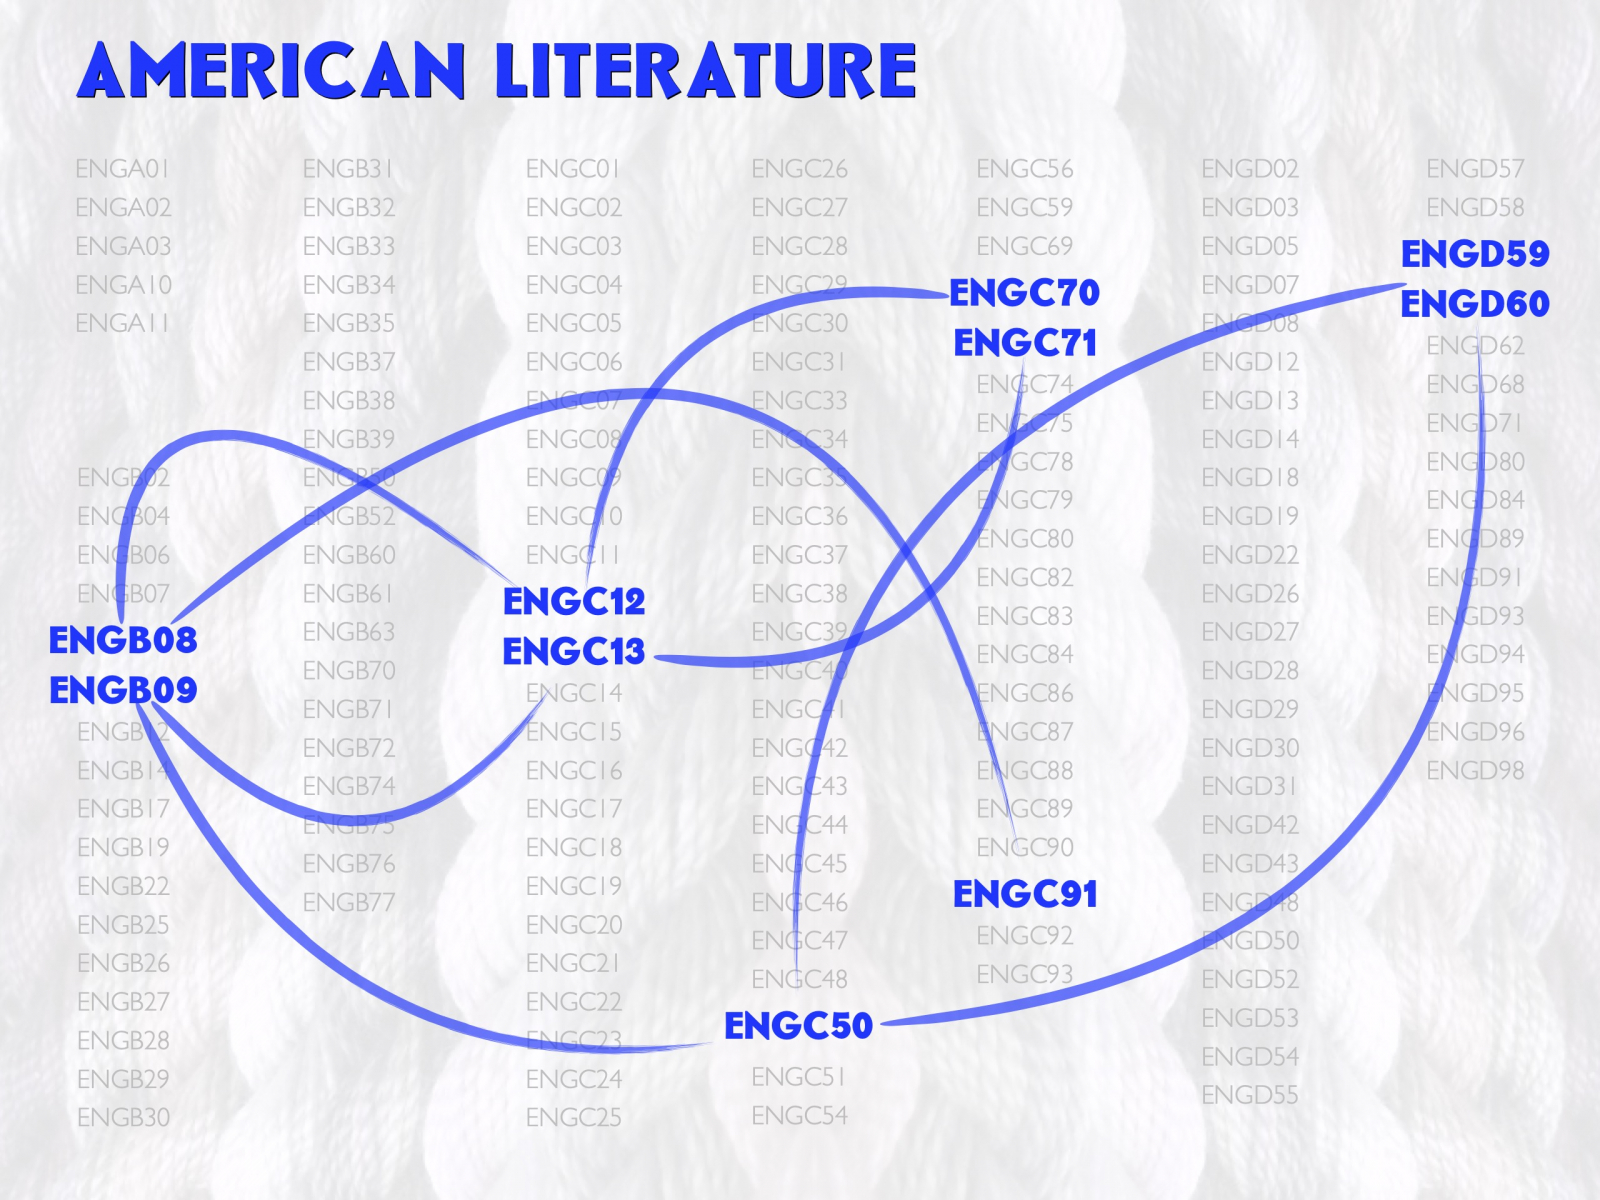 American Literature road map